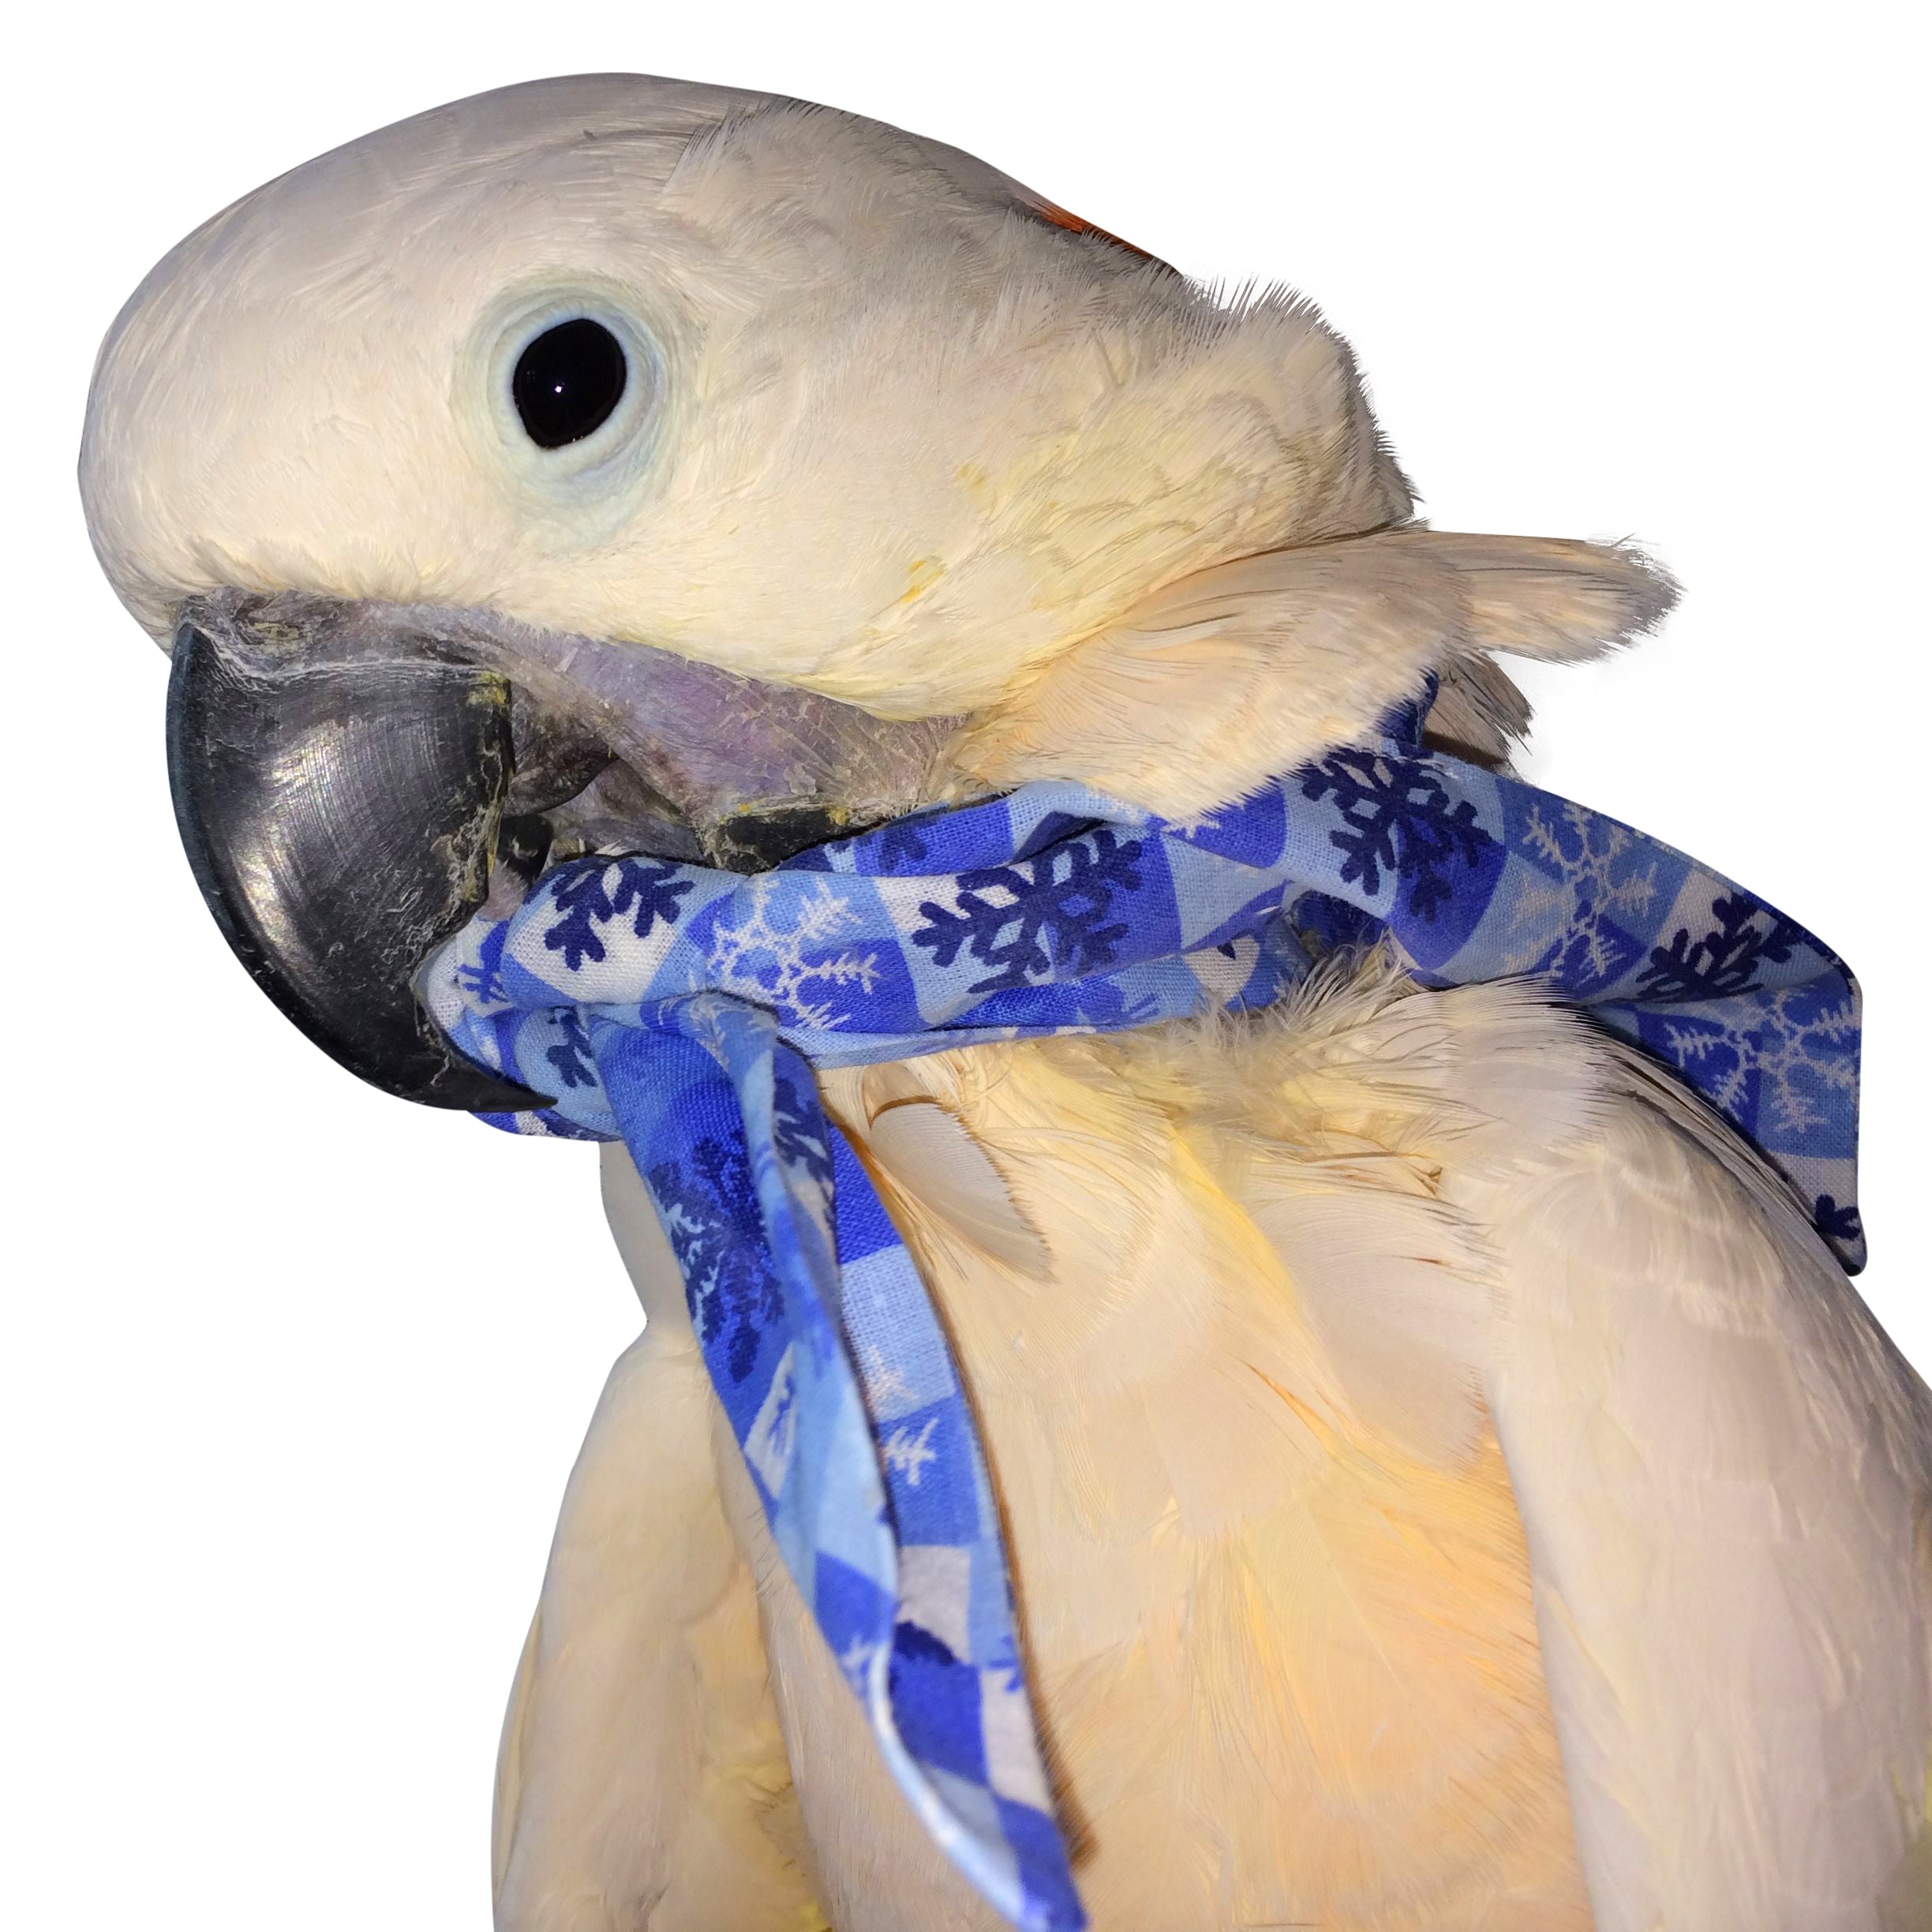 DYI birdie bandana pattern